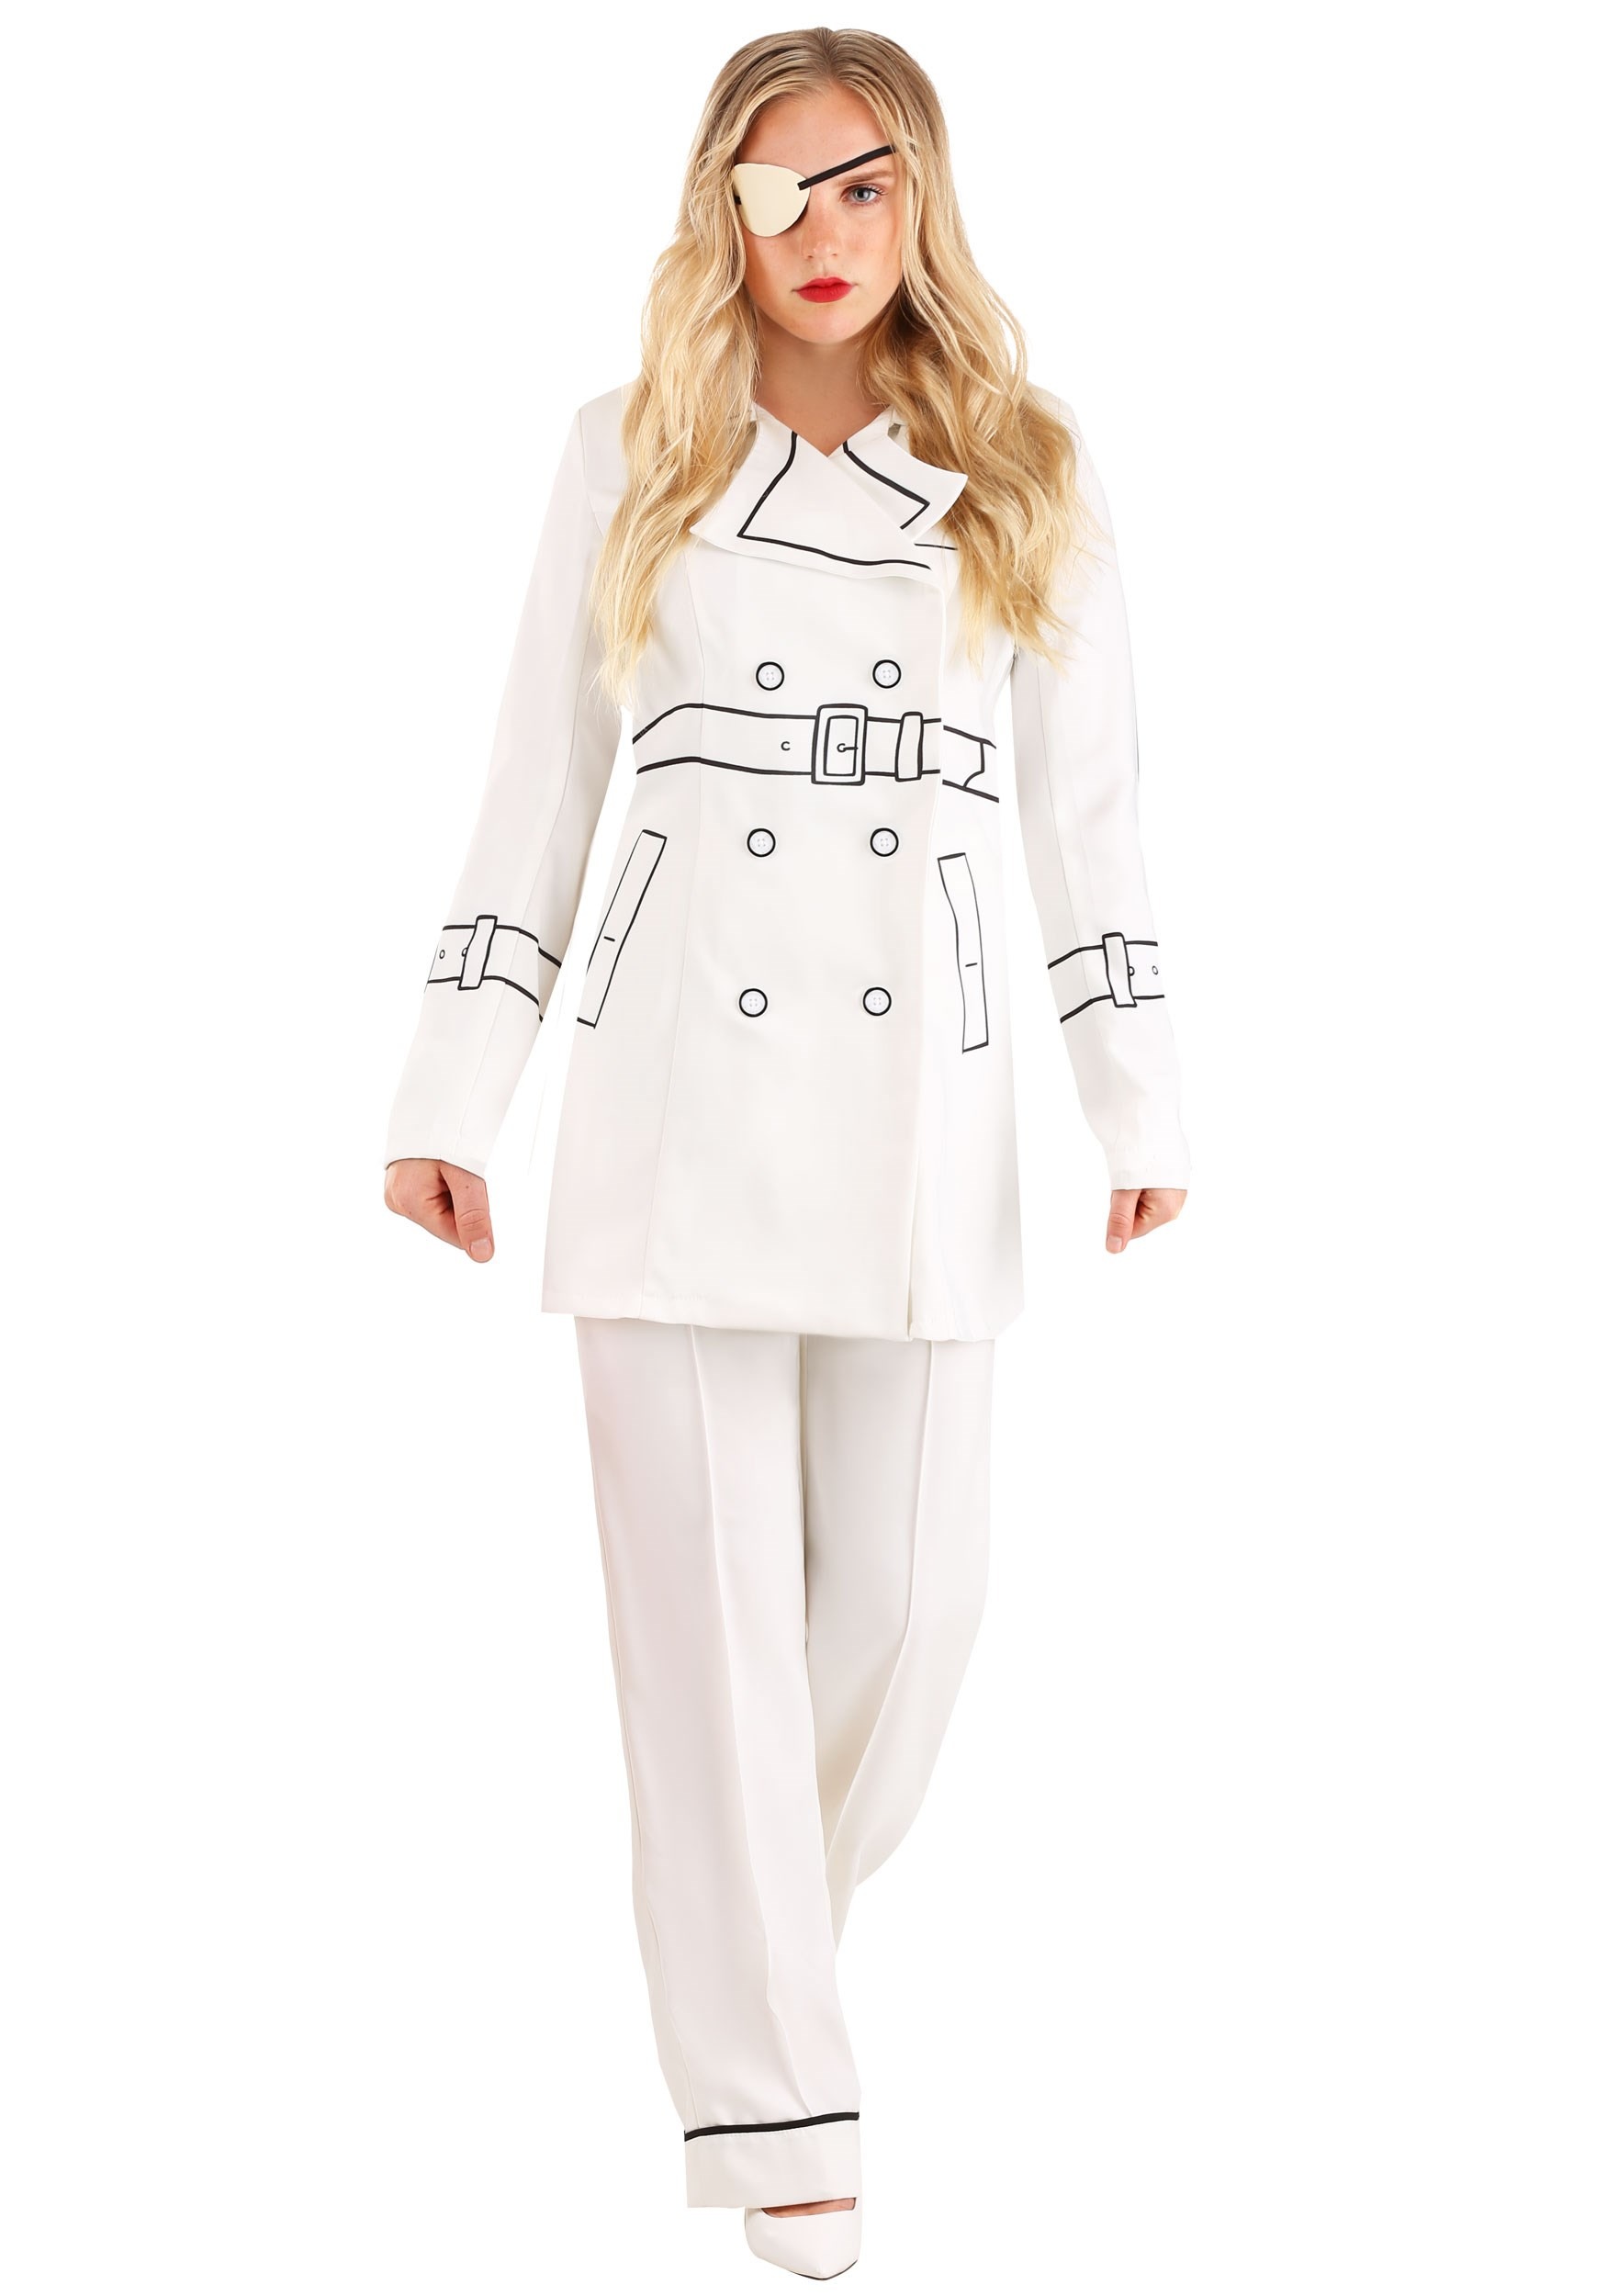 Image of Kill Bill Elle Driver Trench Coat Costume for Women ID FUN9316AD-M